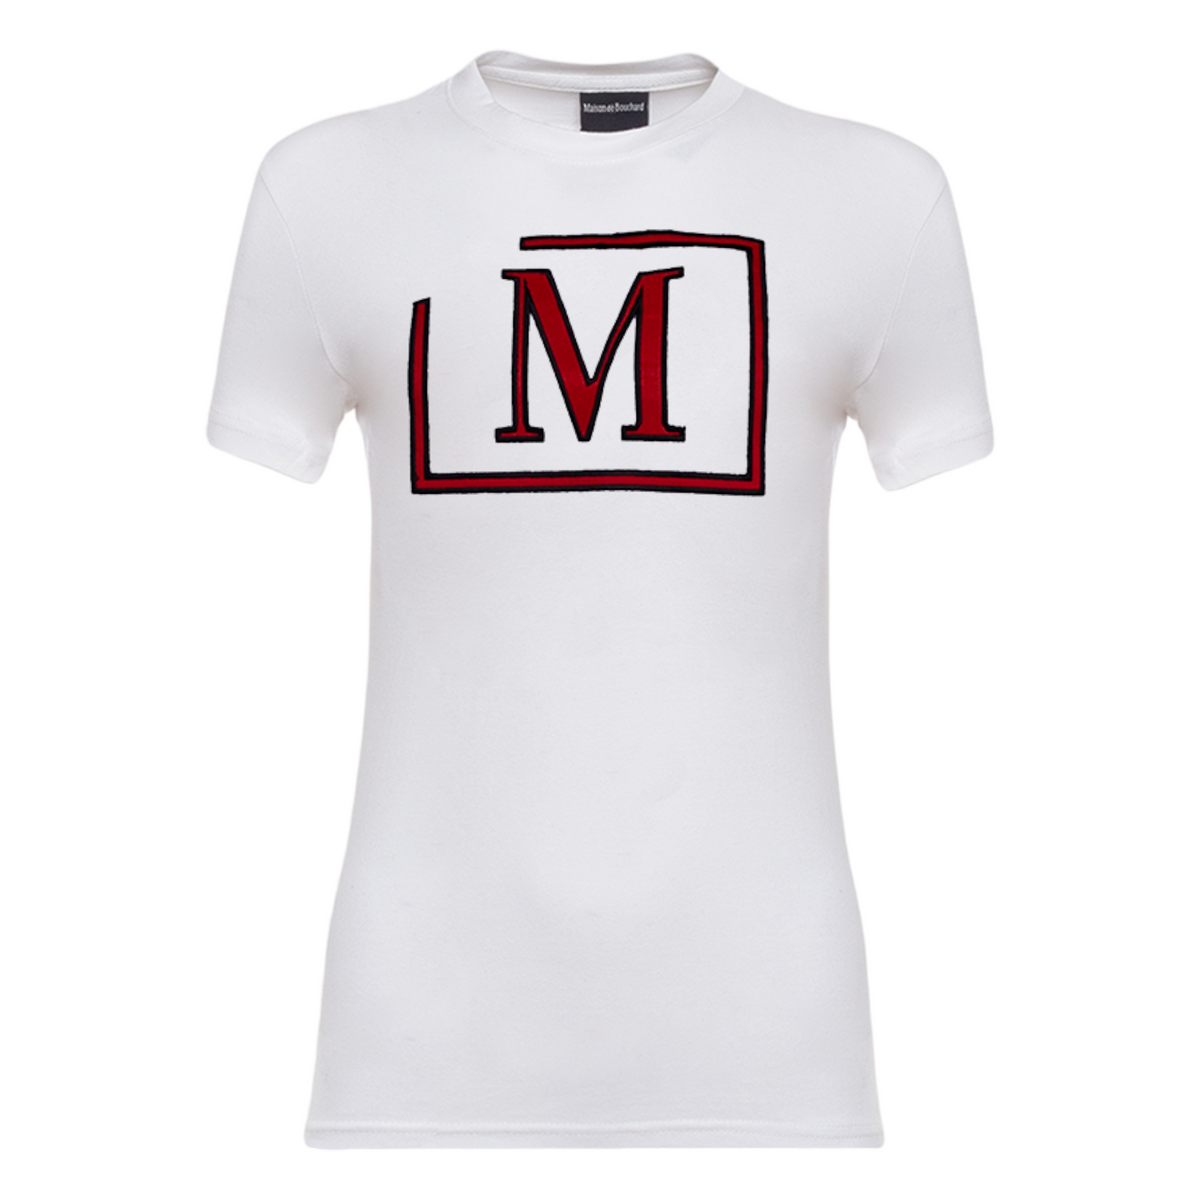 MDB Brand Women's Classic M Embroidered Logo Tee - White w/ Black Outline Logo